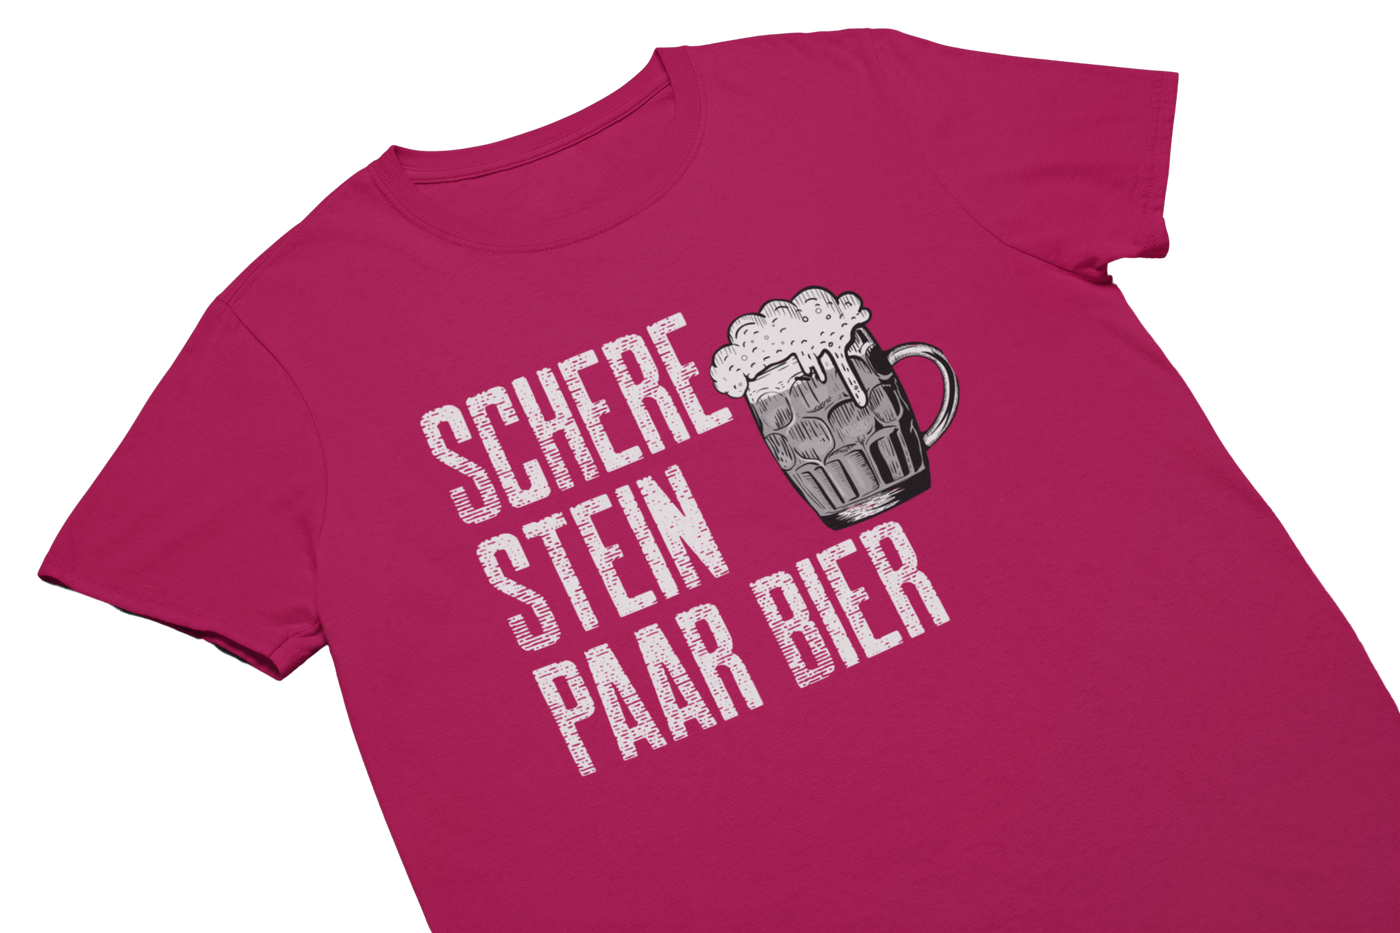 SCHERE STEIN PAAR BIER - T-Shirt Sorbet